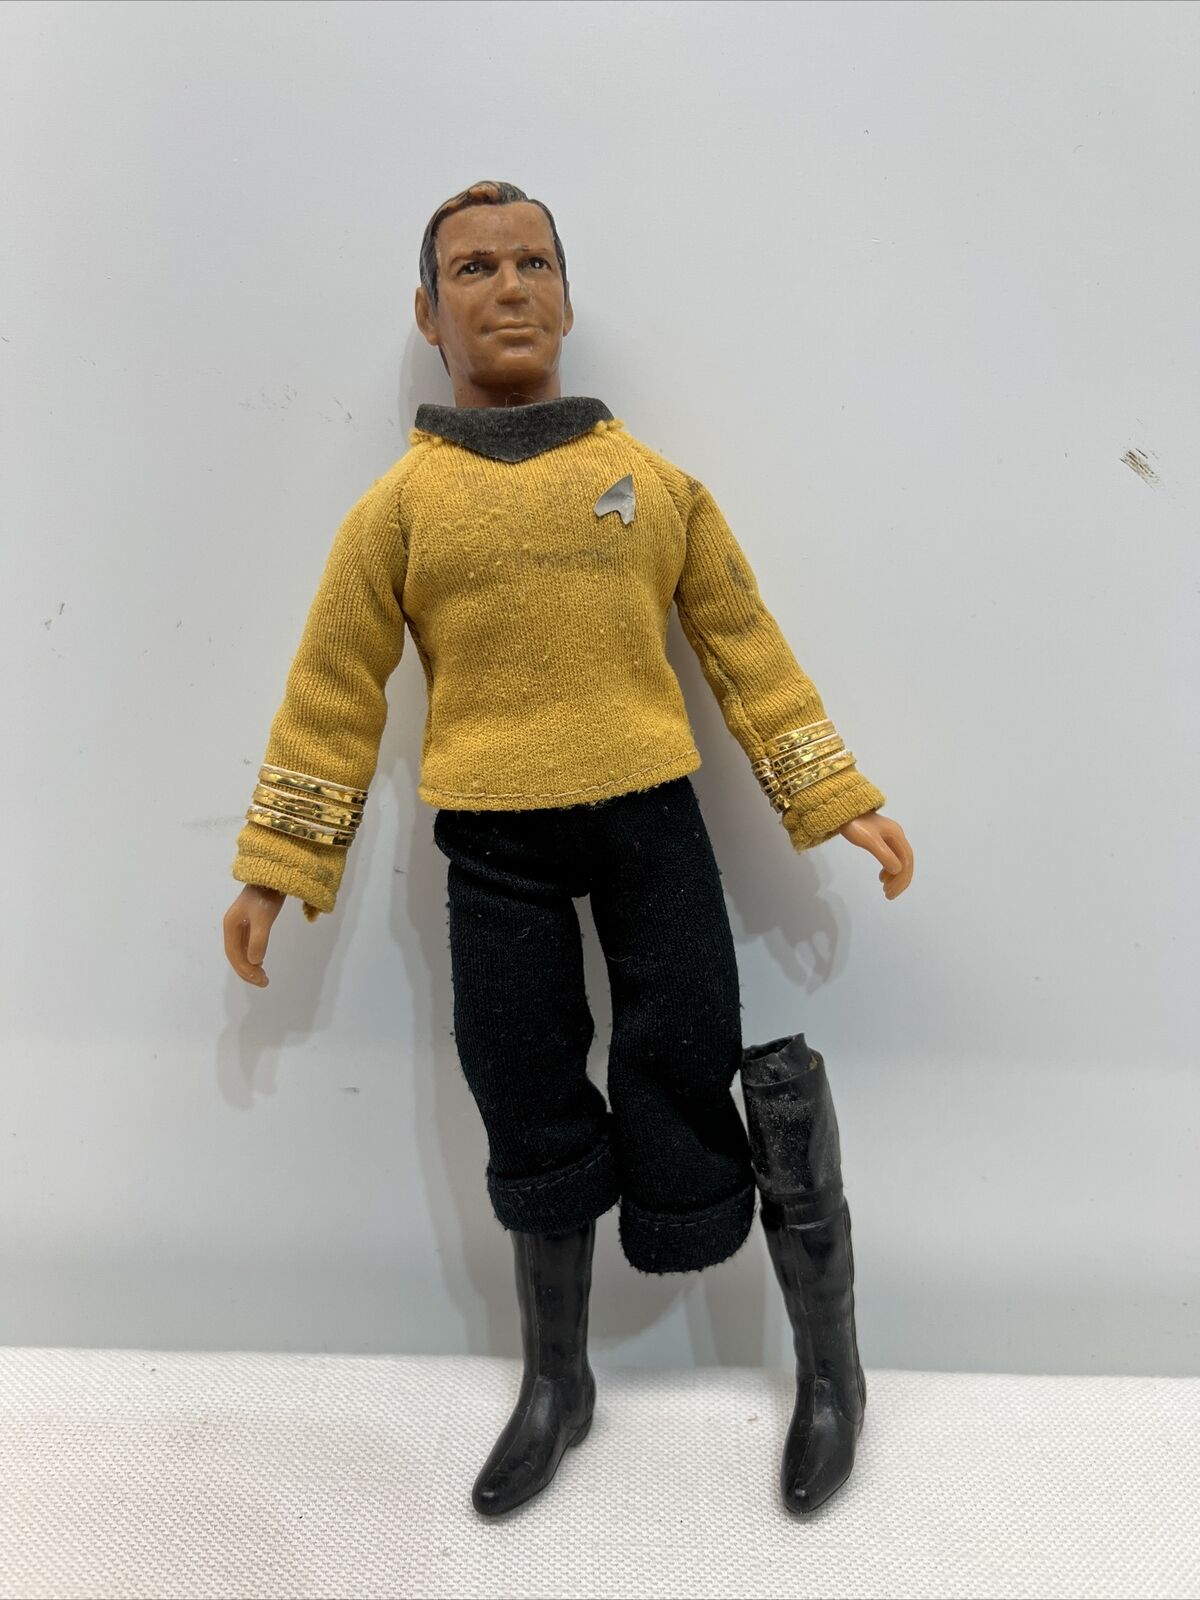 VINTAGE 1974 Mego Star Trek Captain Kirk Action Figure William Shatner